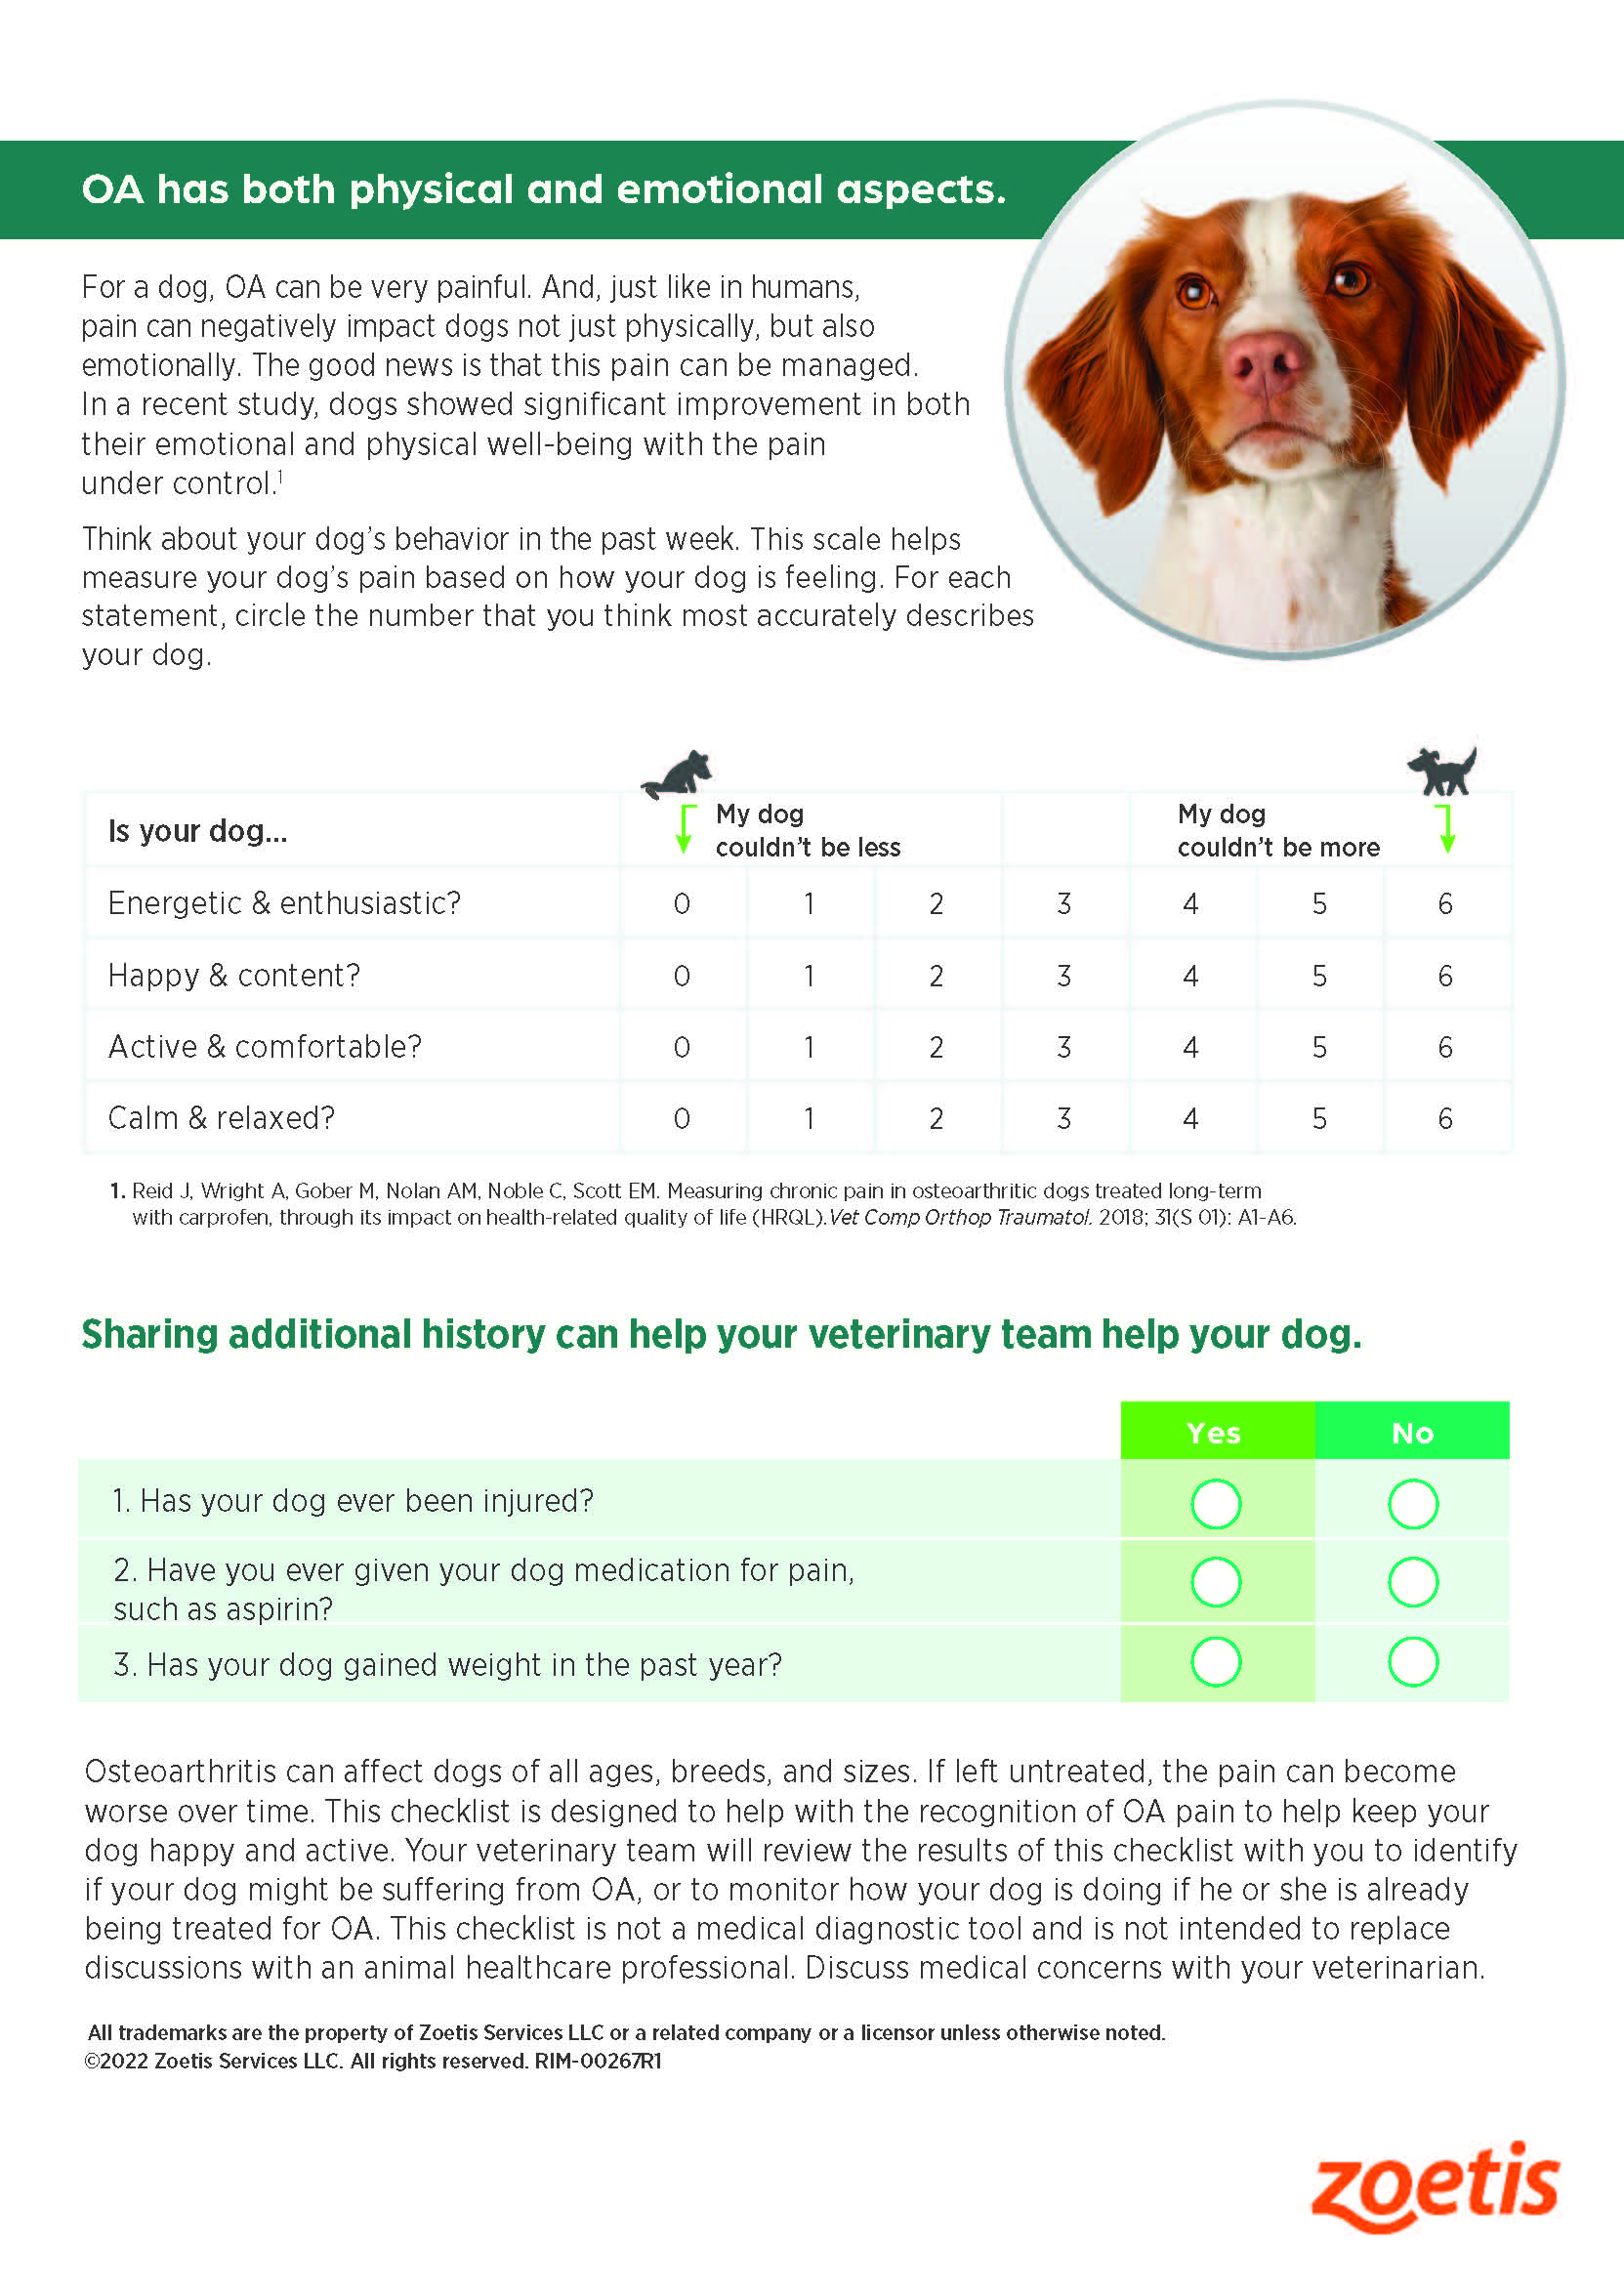 Canine OA checklist page 2